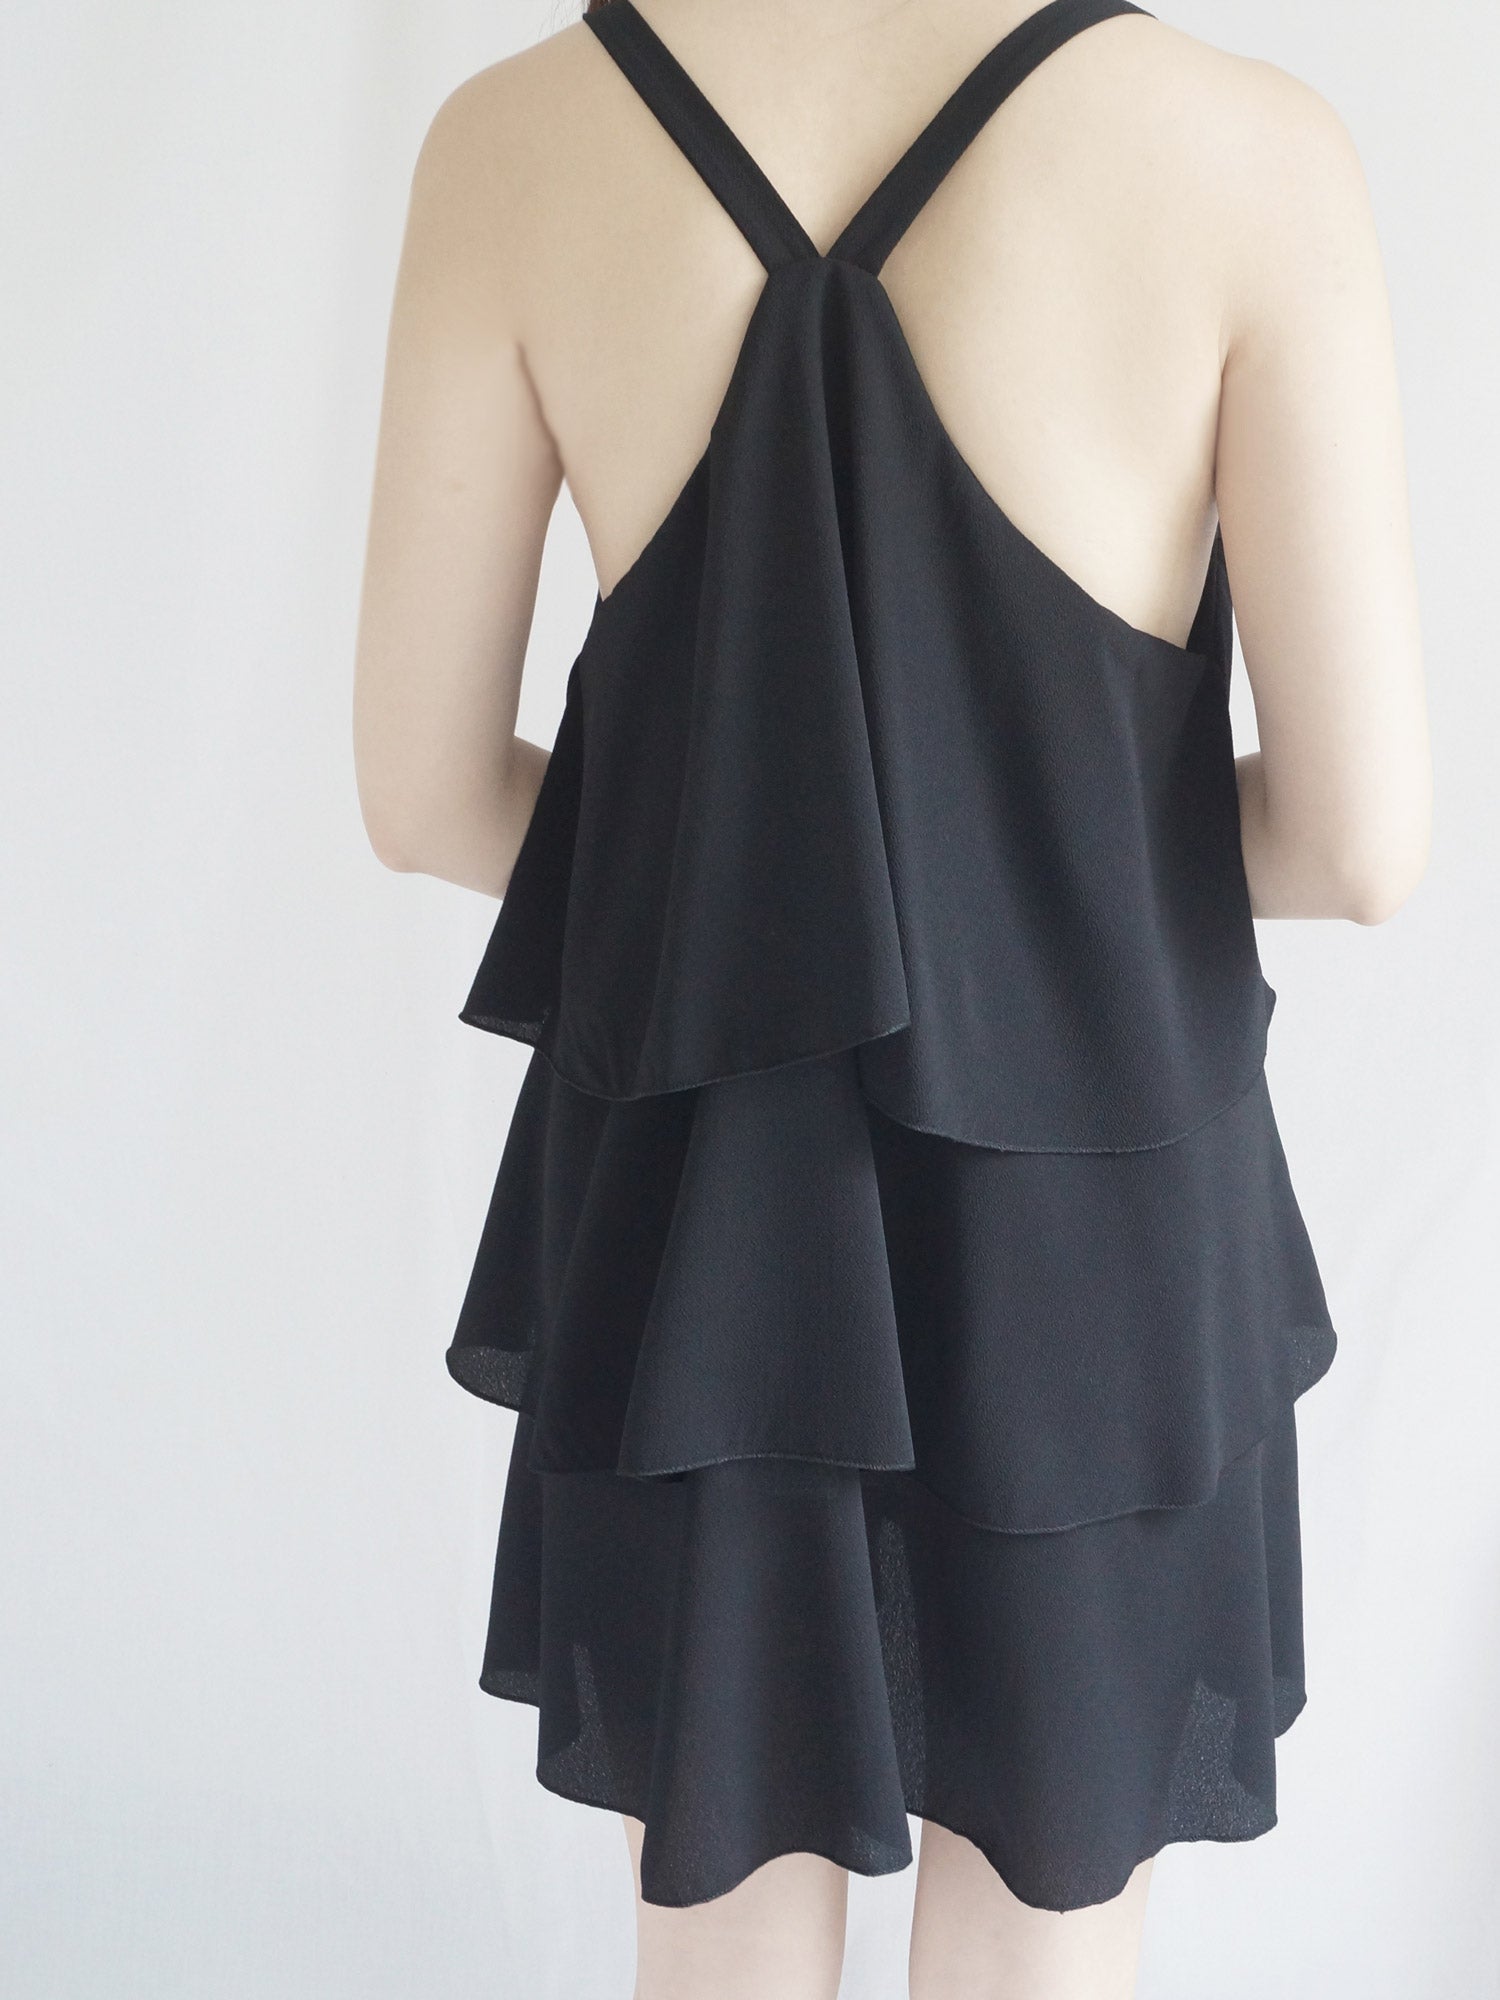 gabi label louisa dress black 6 2